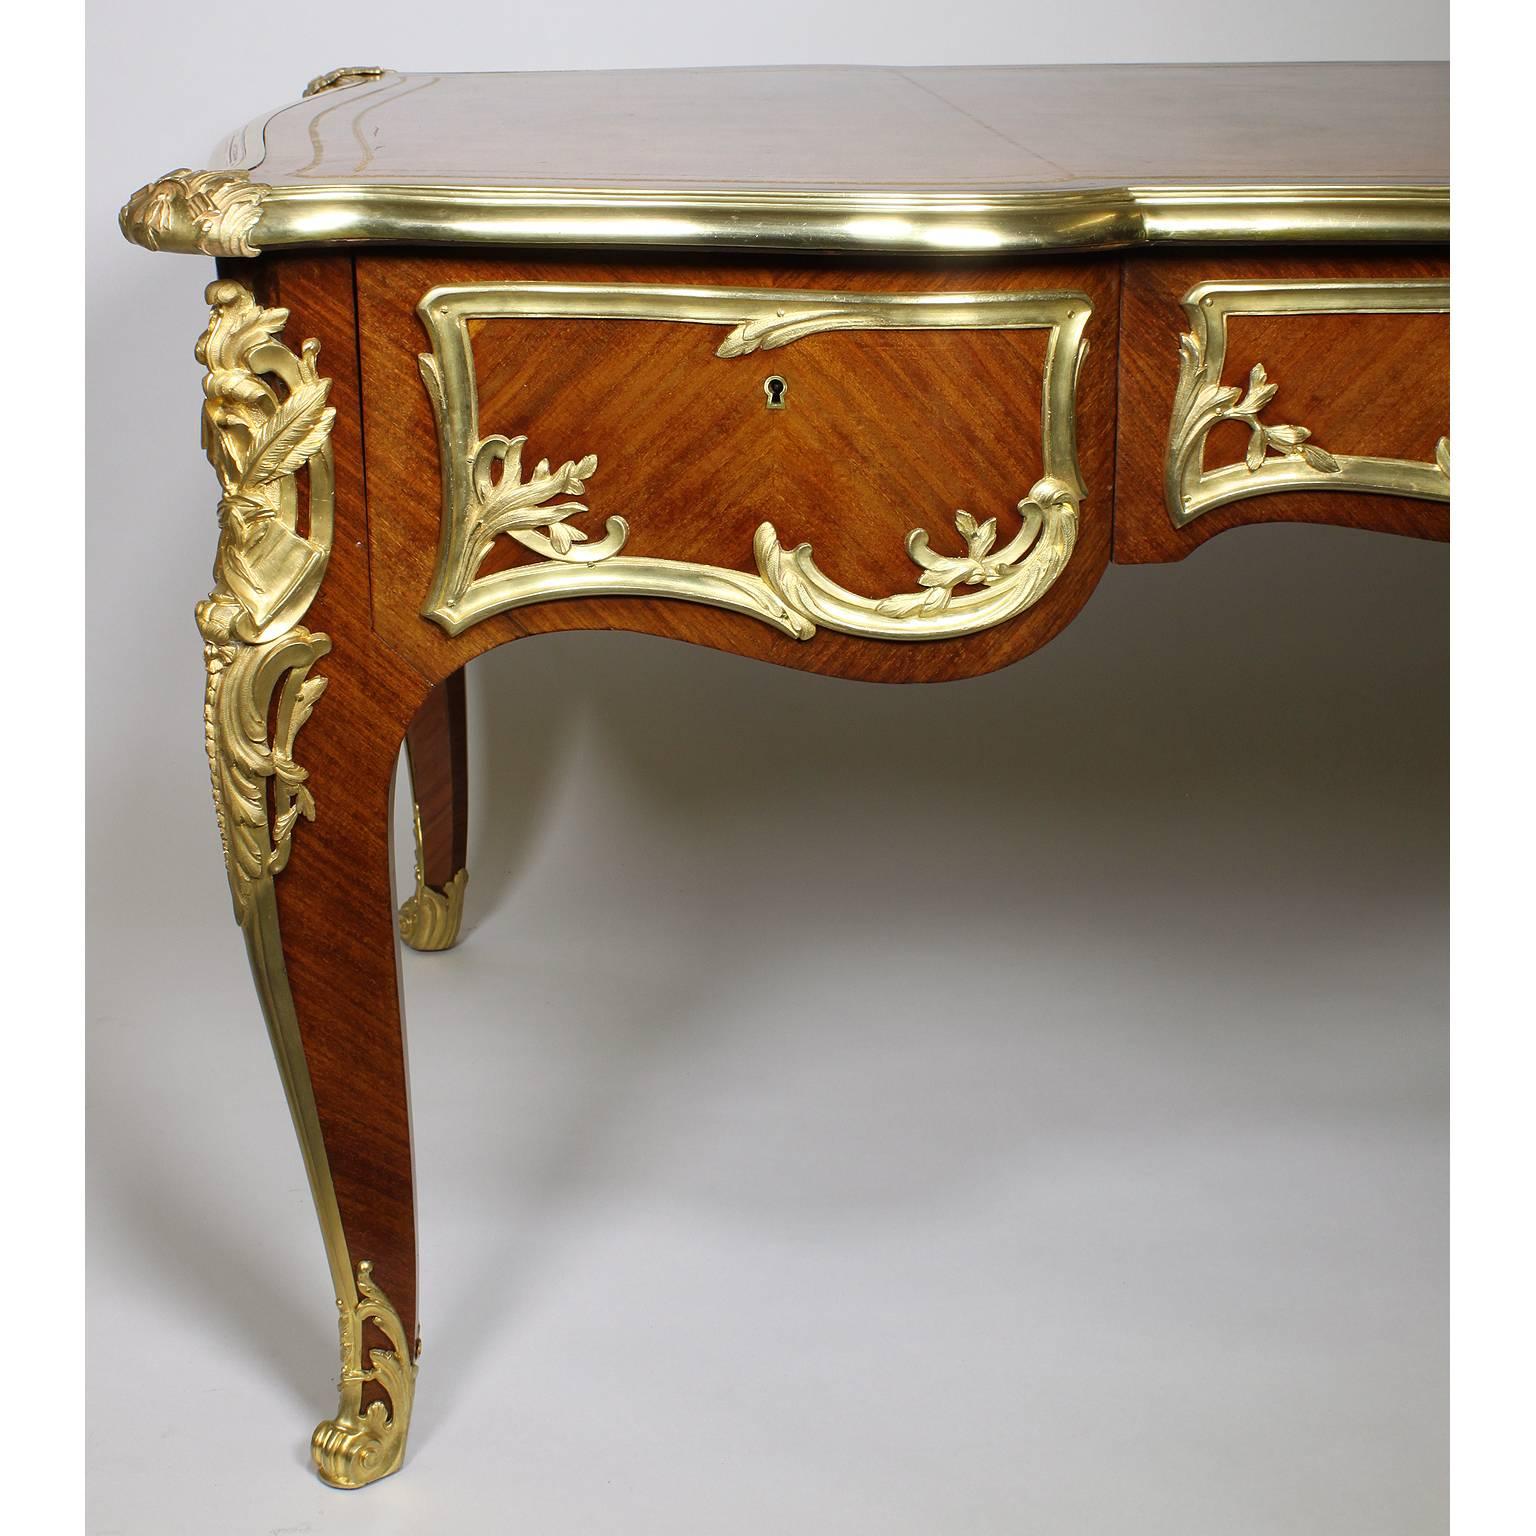 French Louis XV Style Gilt Bronze-Mounted Kingwood Three-Drawer Bureau Plat Desk For Sale 5